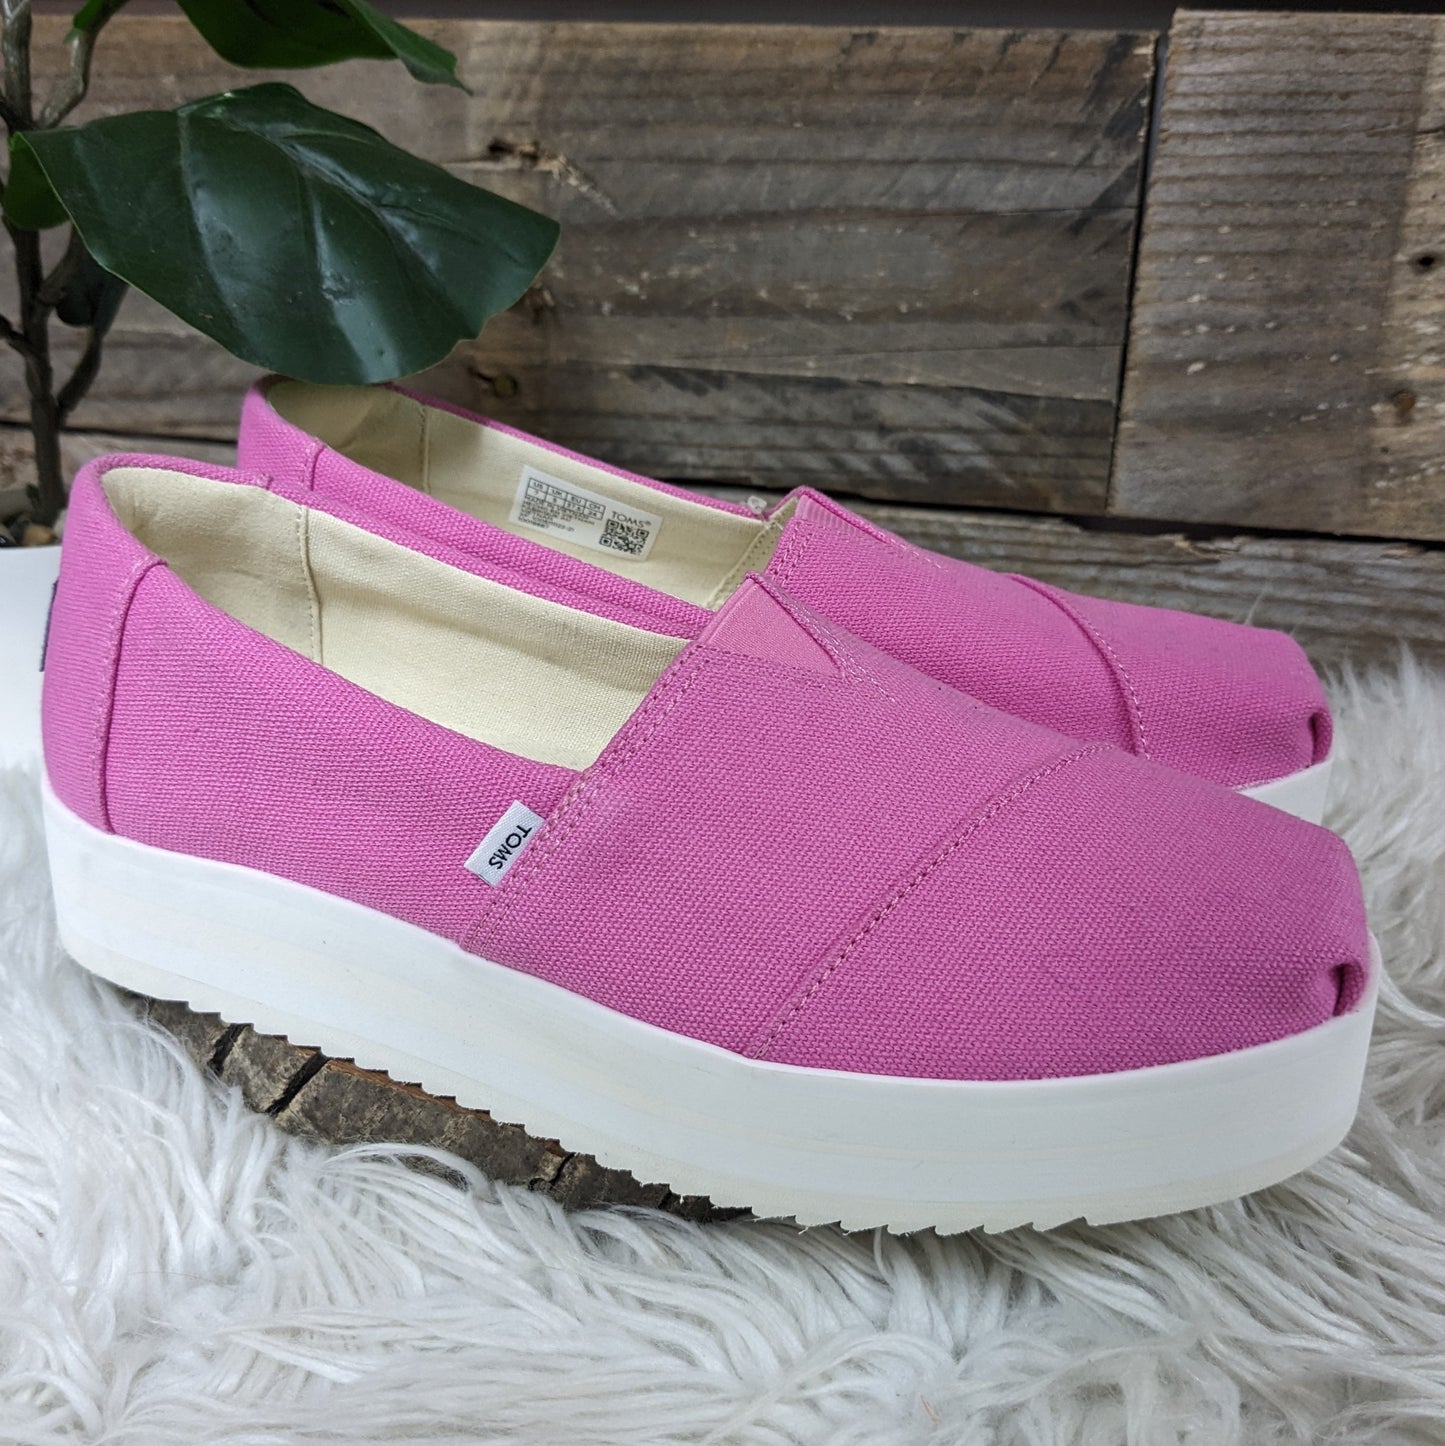 Toms Pink Platform Sneakers Sz 7